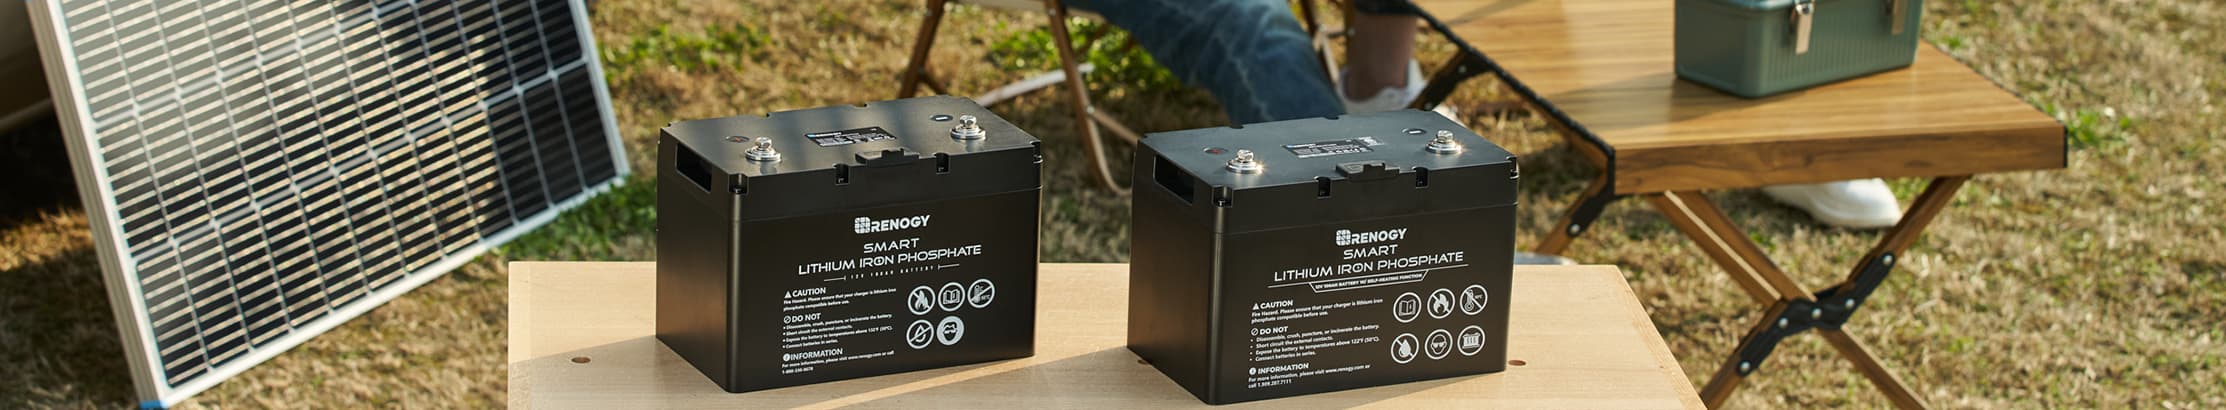 How to make LiFePO4 Battery Balancing？